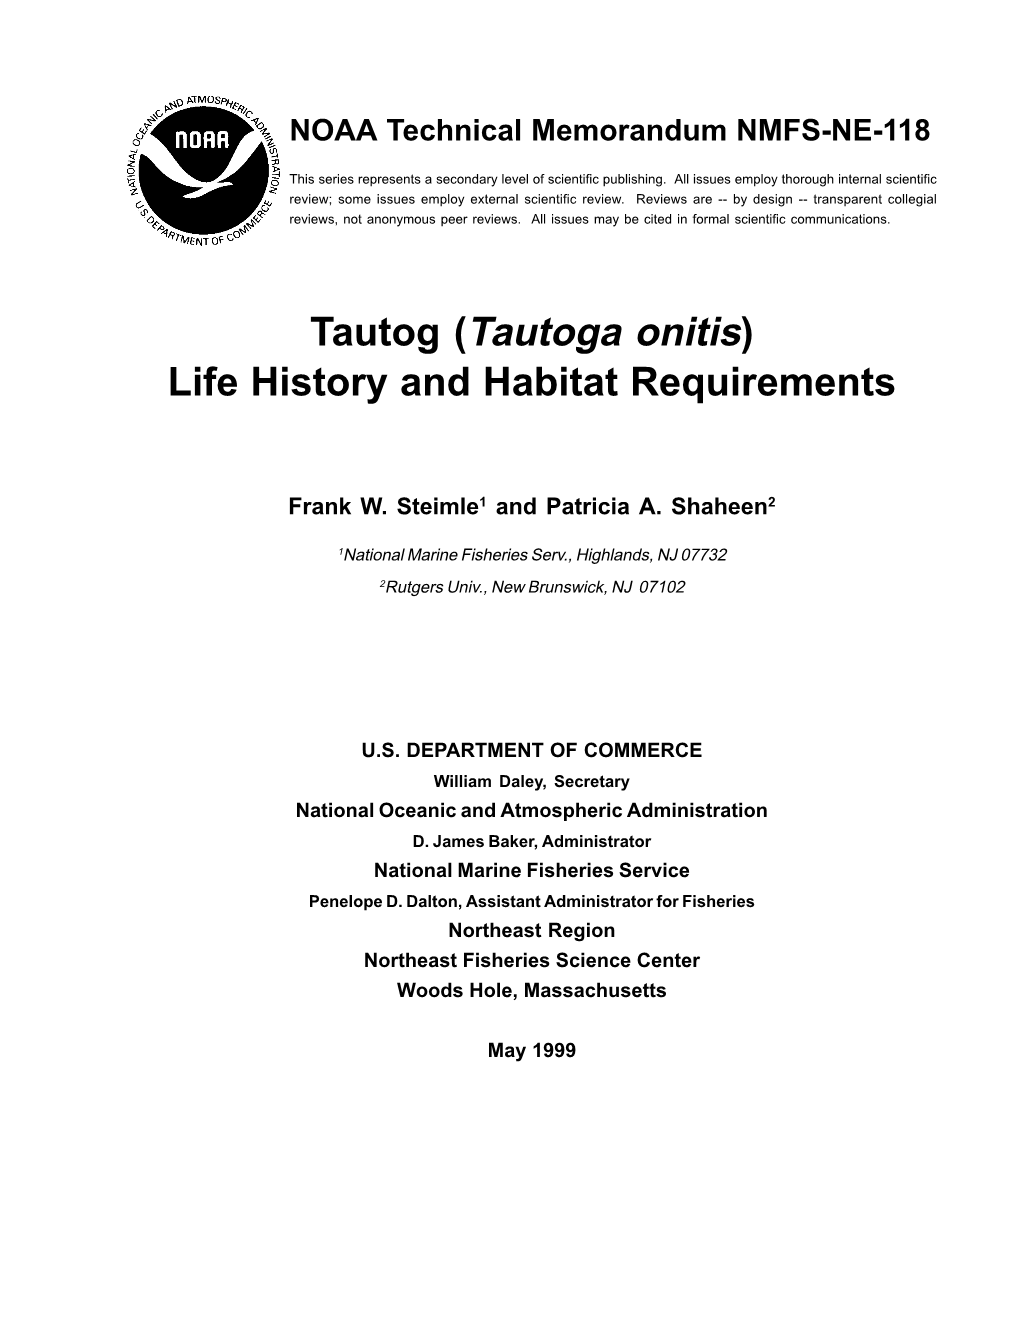 Tautog (Tautoga Onitis) Life History and Habitat Requirements